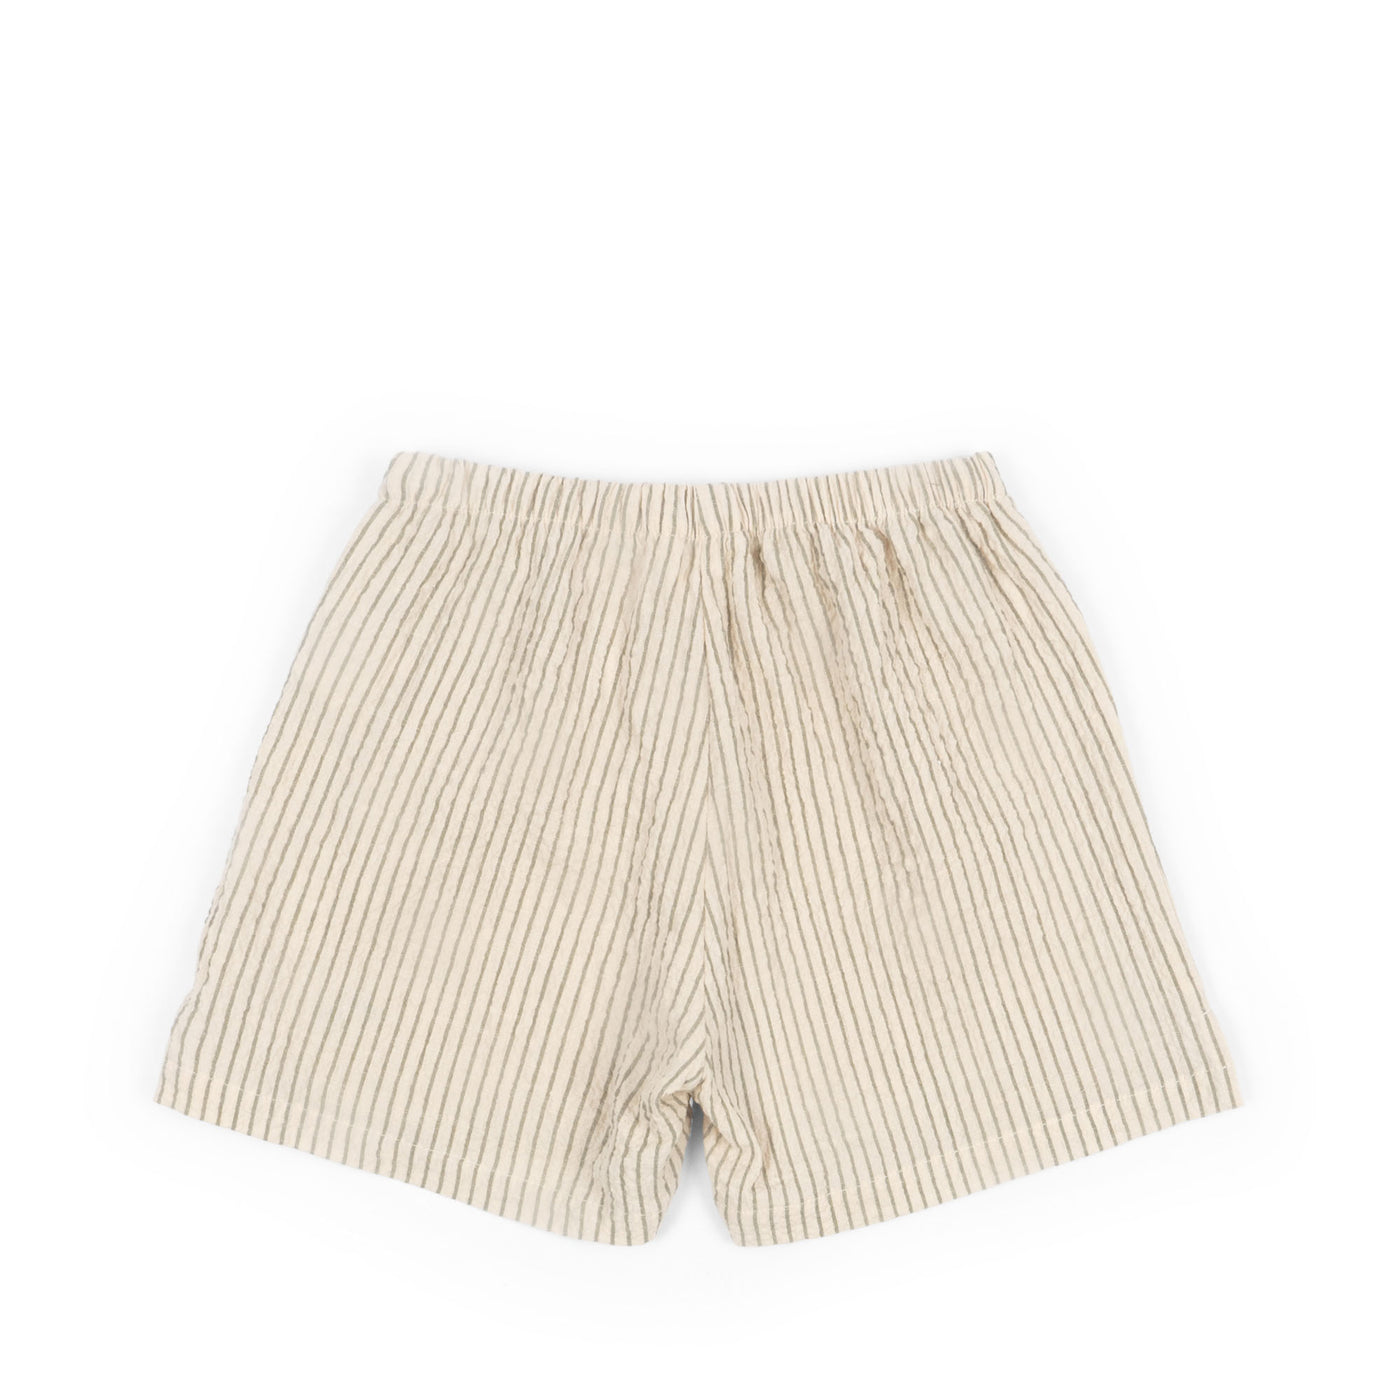 Elliot shorts, Tea stripe